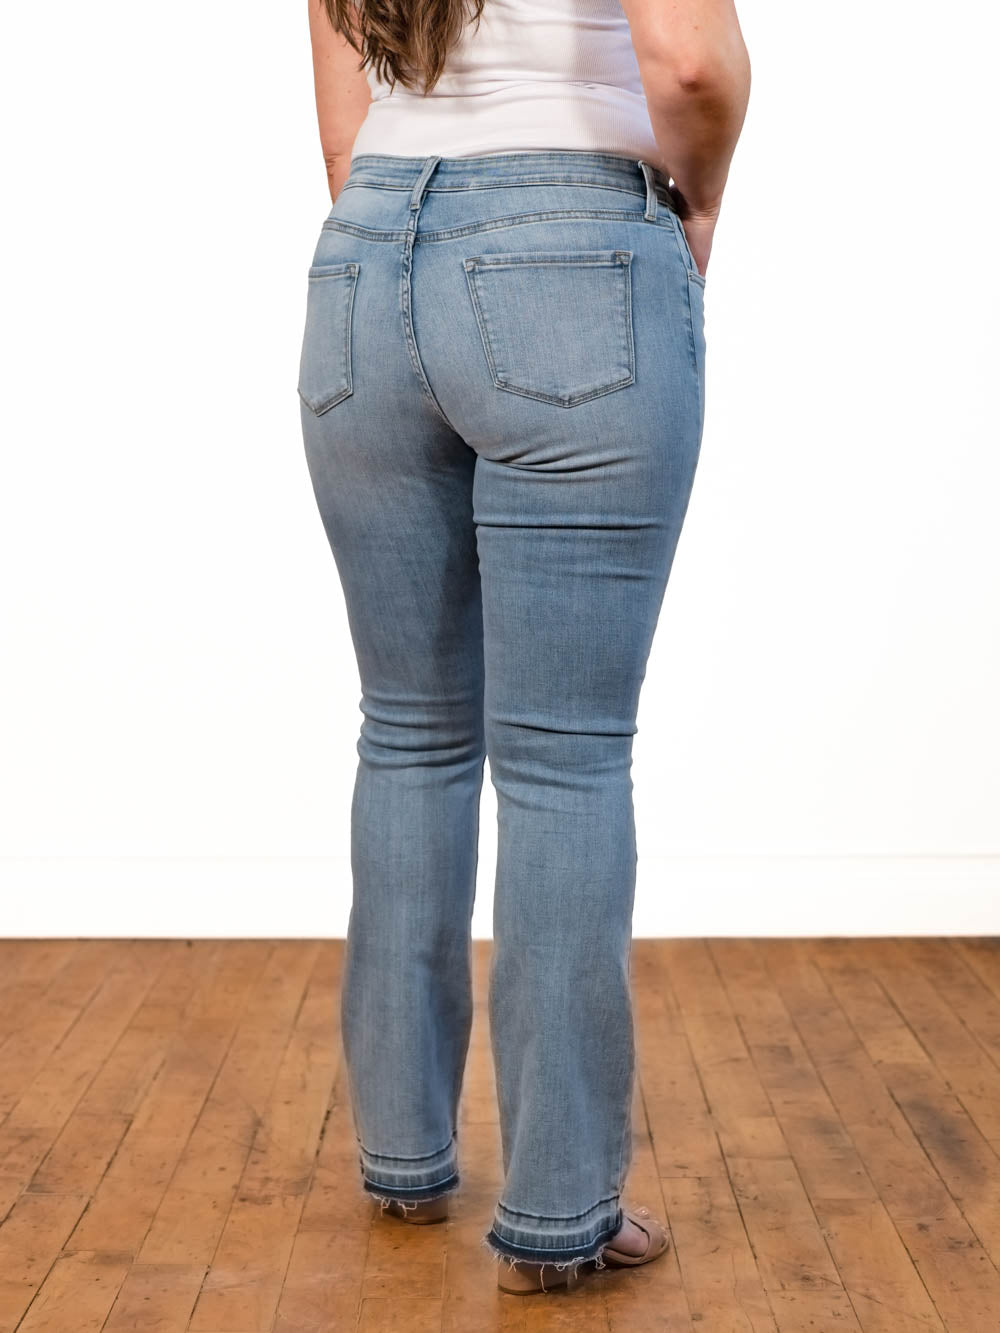 Bootcut for Tall Women | Long Jeans - Amalli Talli